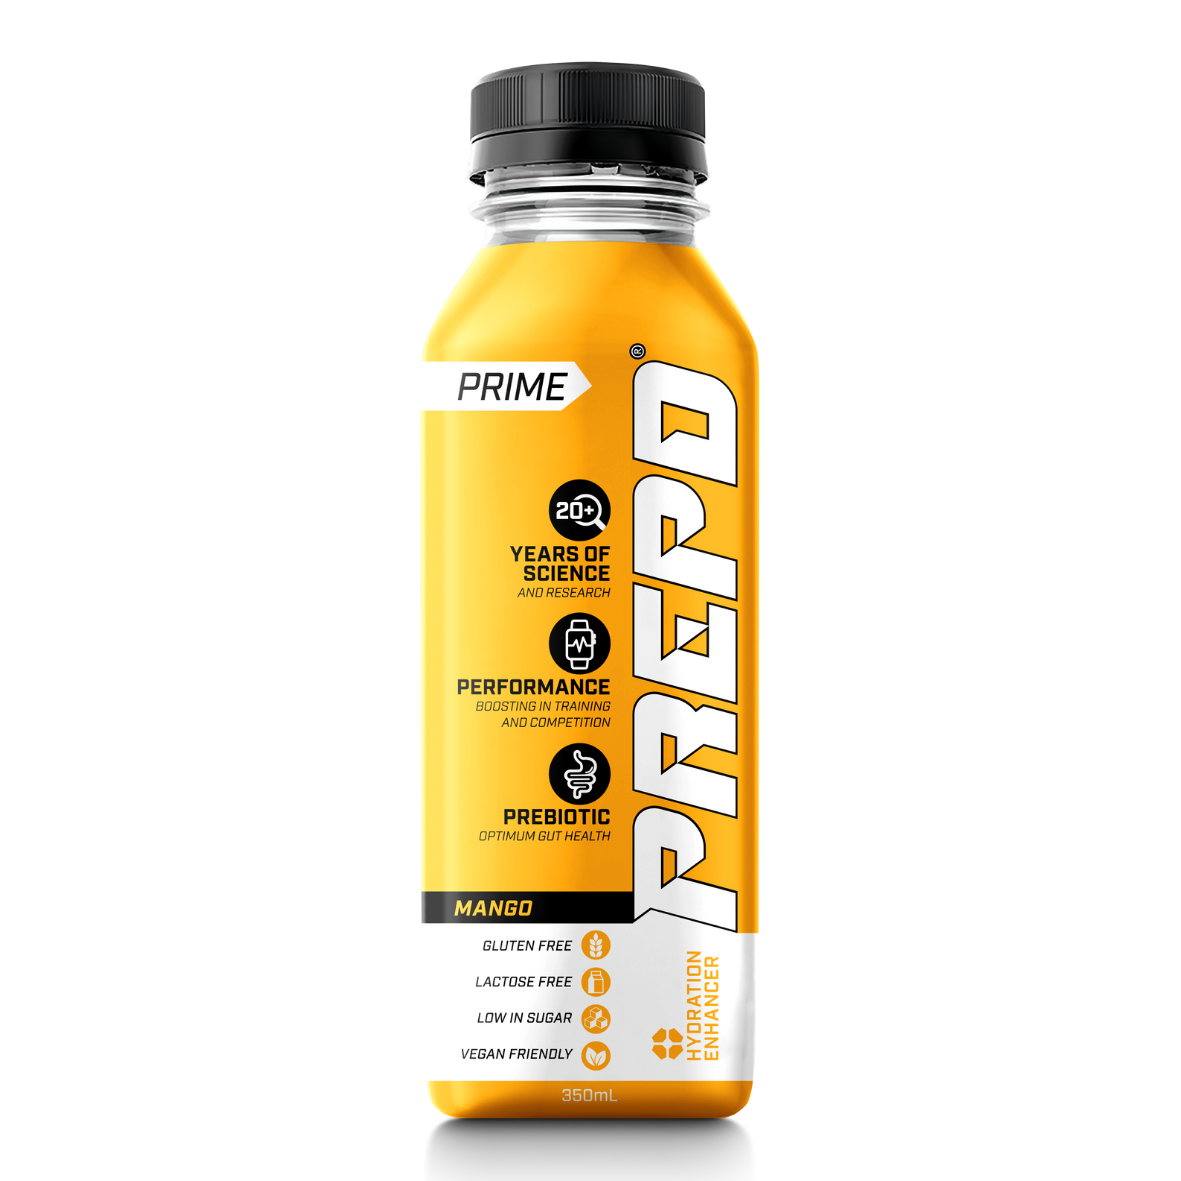 PREPD Hydration Prime Mango 350mL bottle.